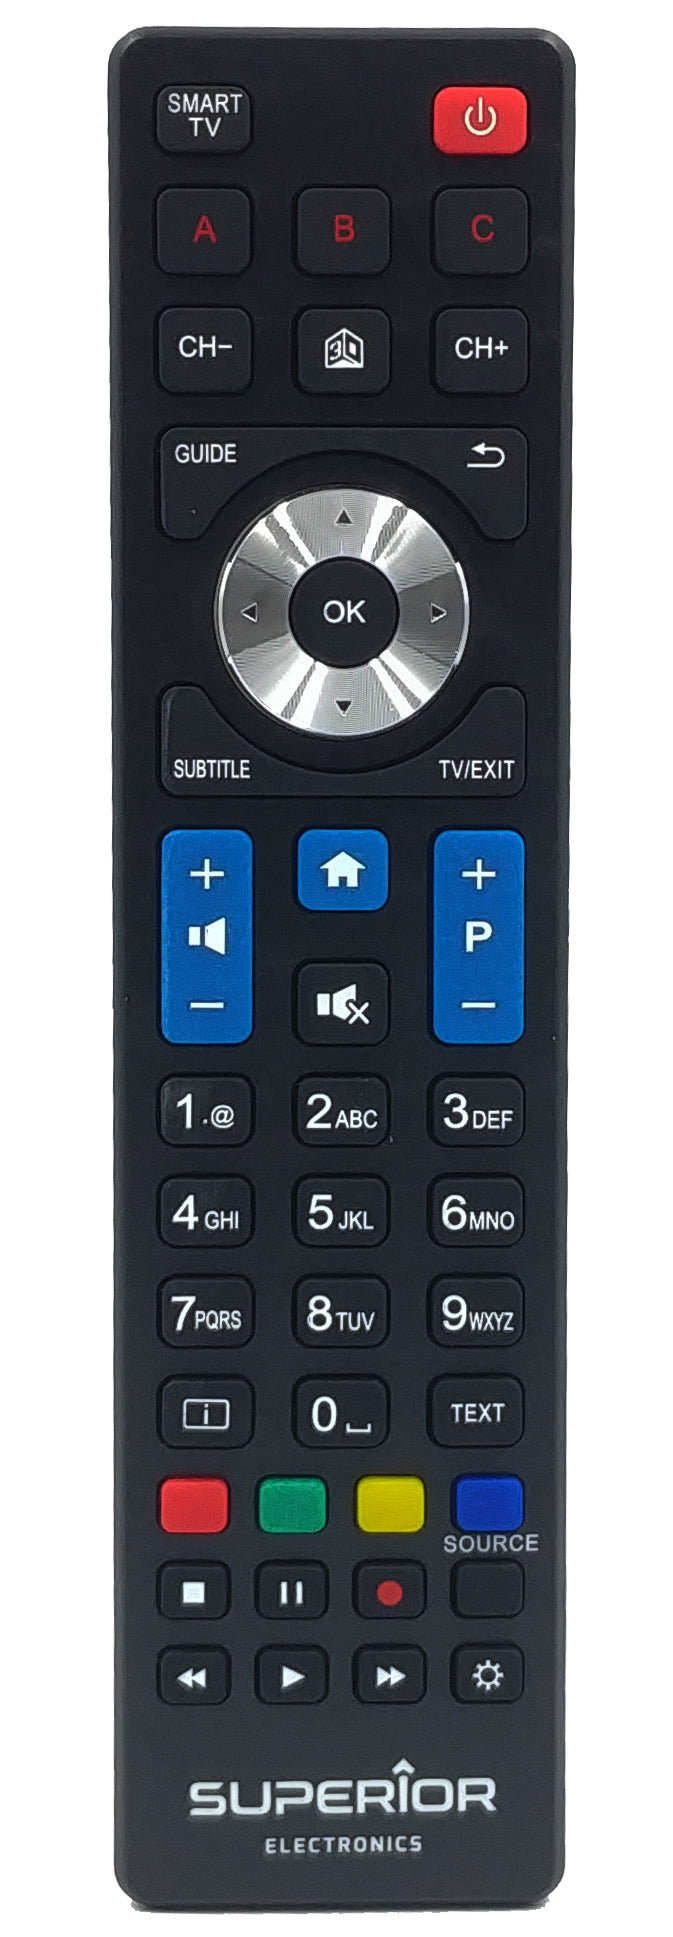 Superior Philips Smart TV Replacement Remote Control